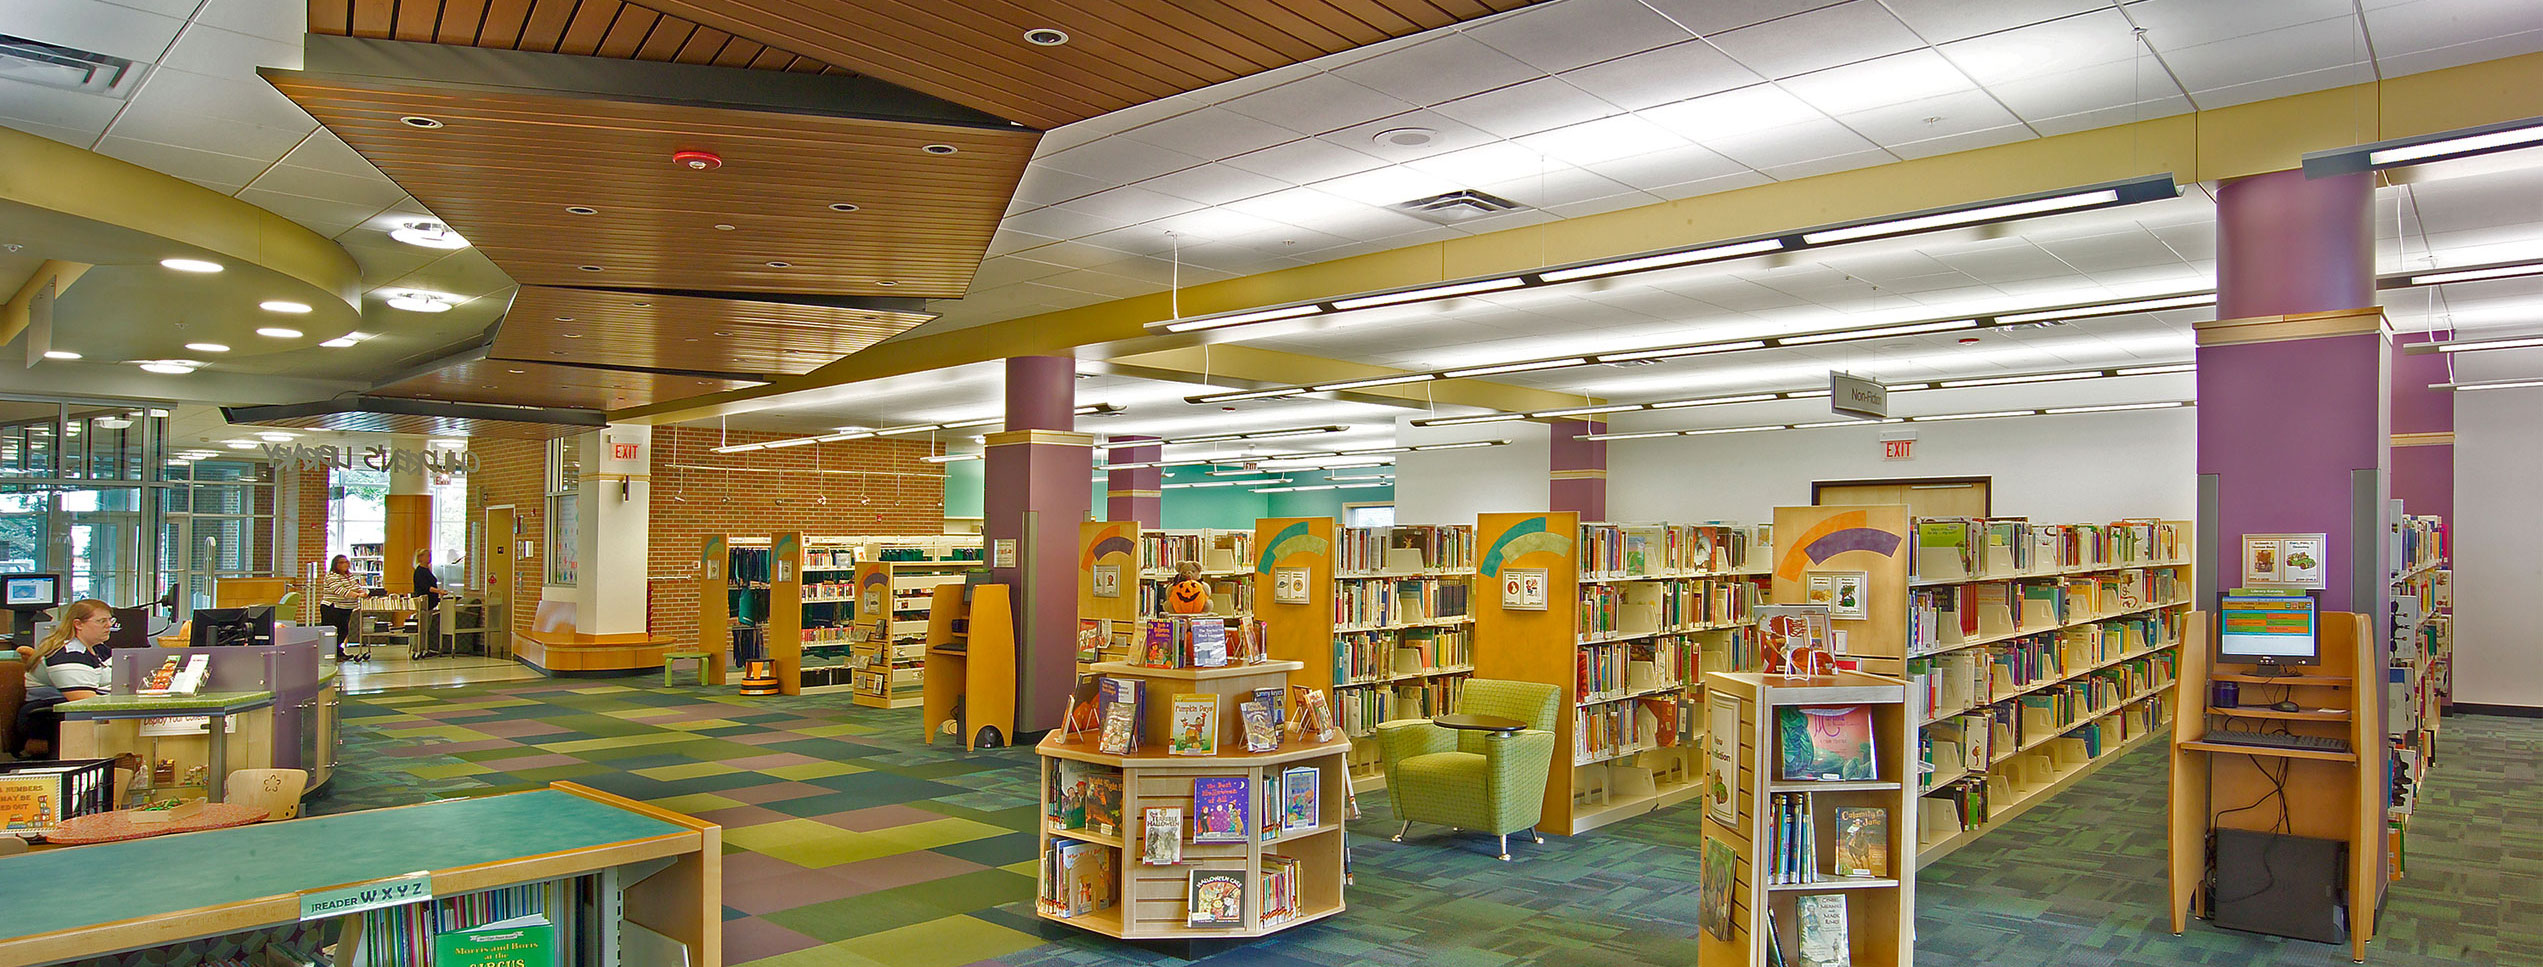 Addison Public Library